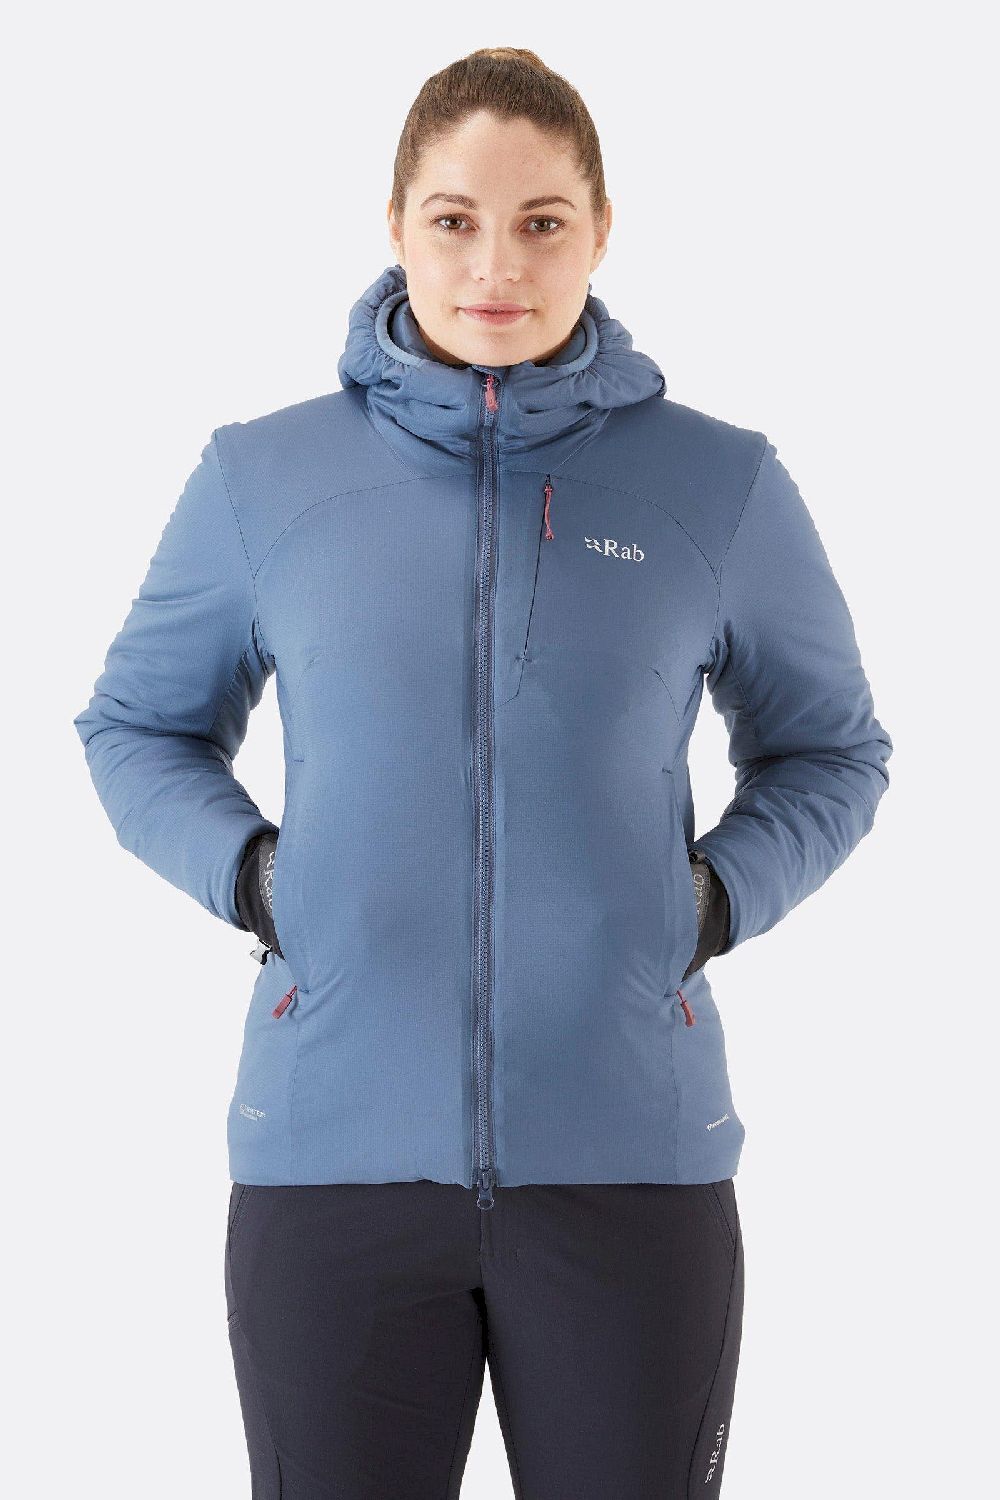 Rab Xenair Alpine Jacket  - Ski jacket - Women's